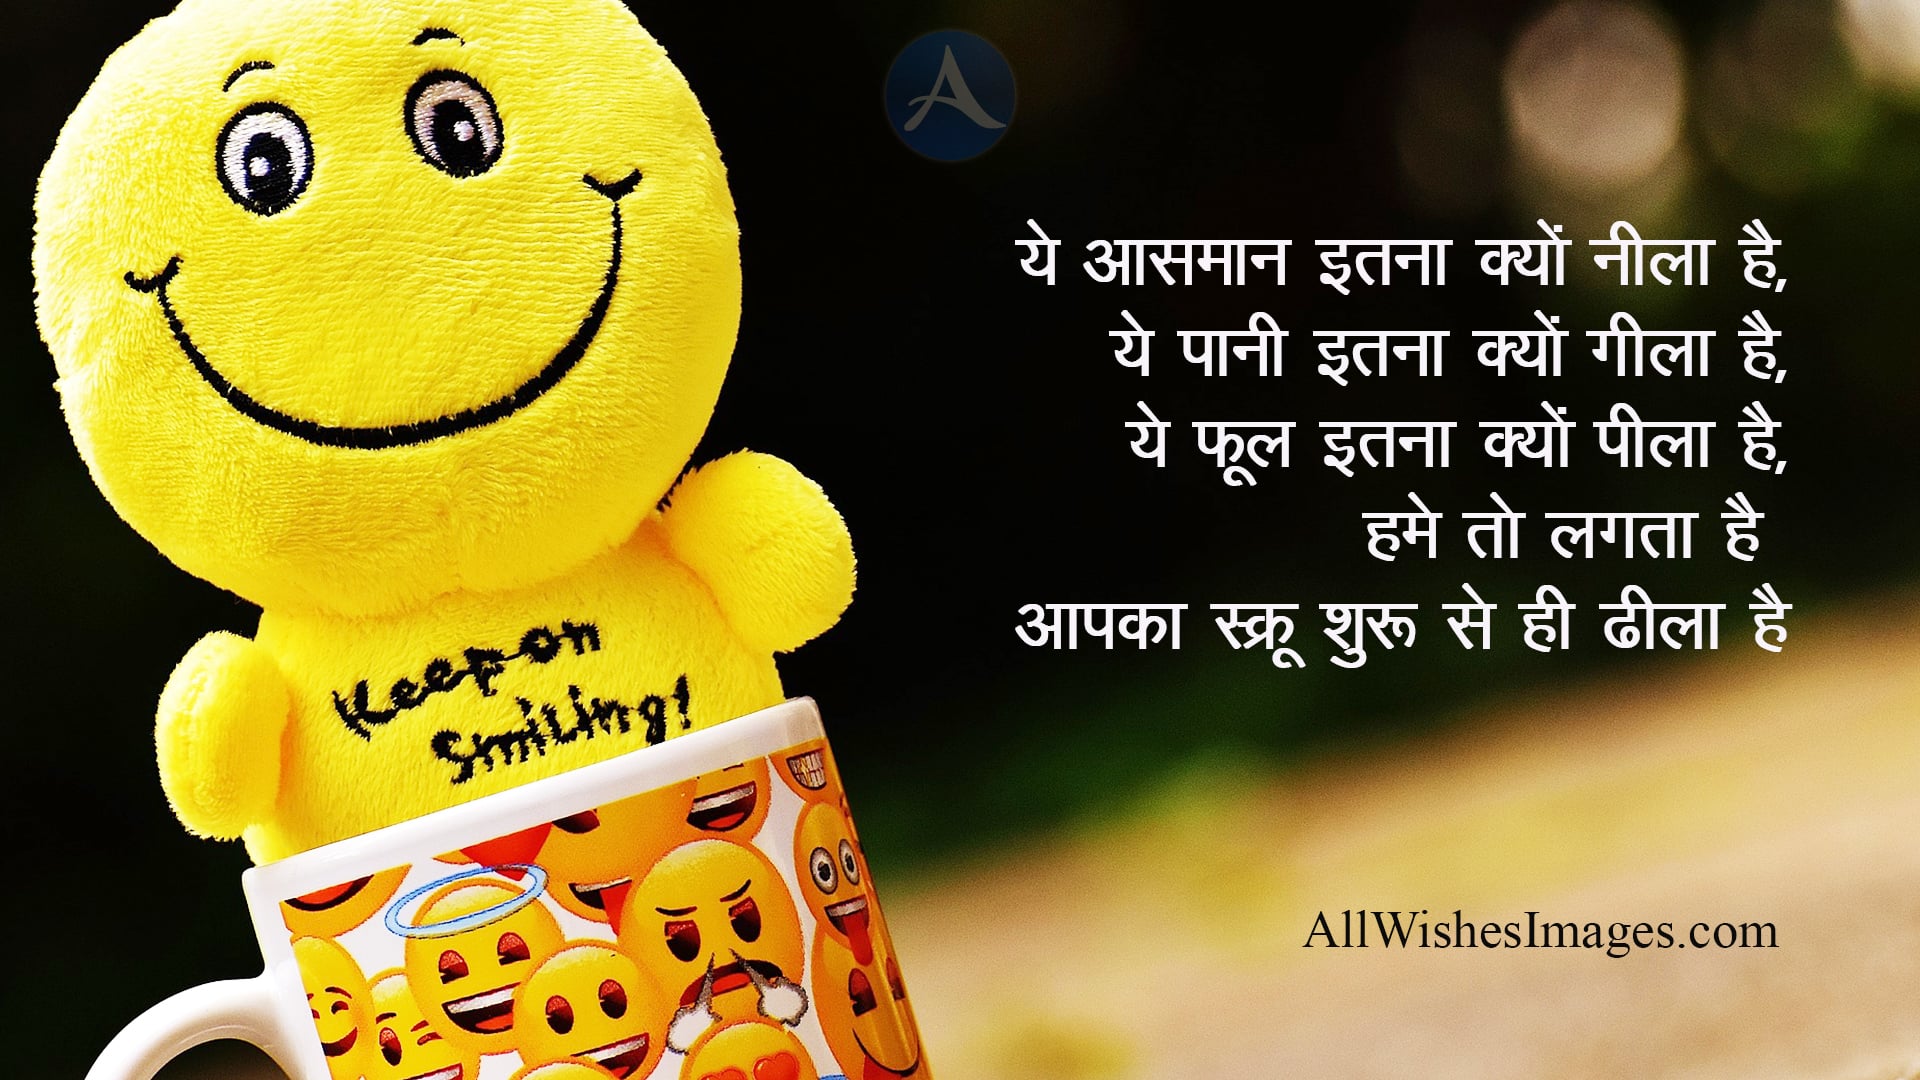 Funny Shayari Hindi Hd - All Wishes Images - Images for WhatsApp